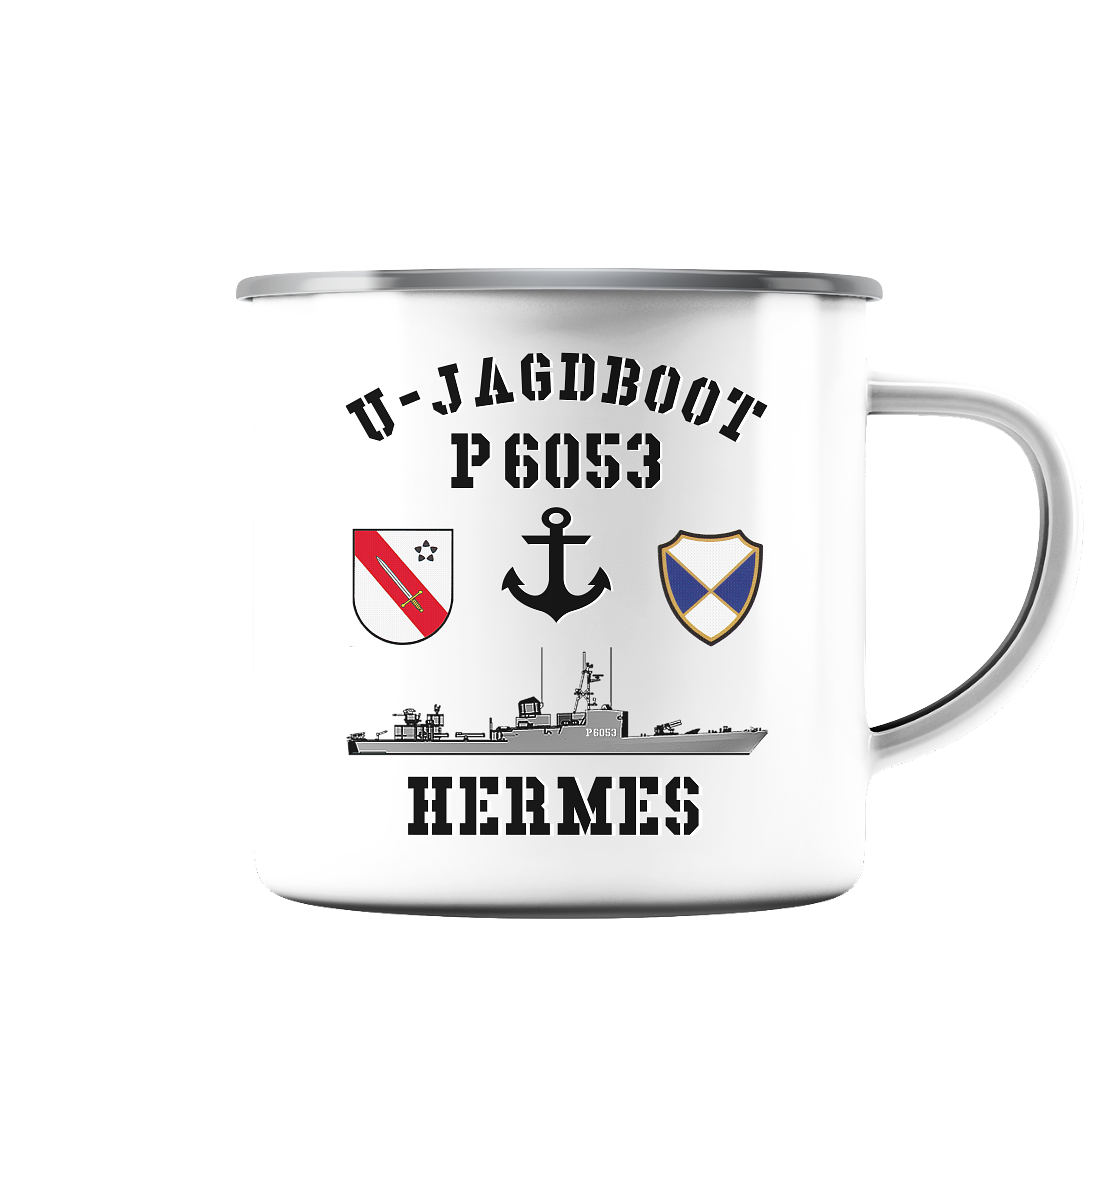 U-Jagdboot P6053 HERMES Anker - Emaille Tasse (Silber)